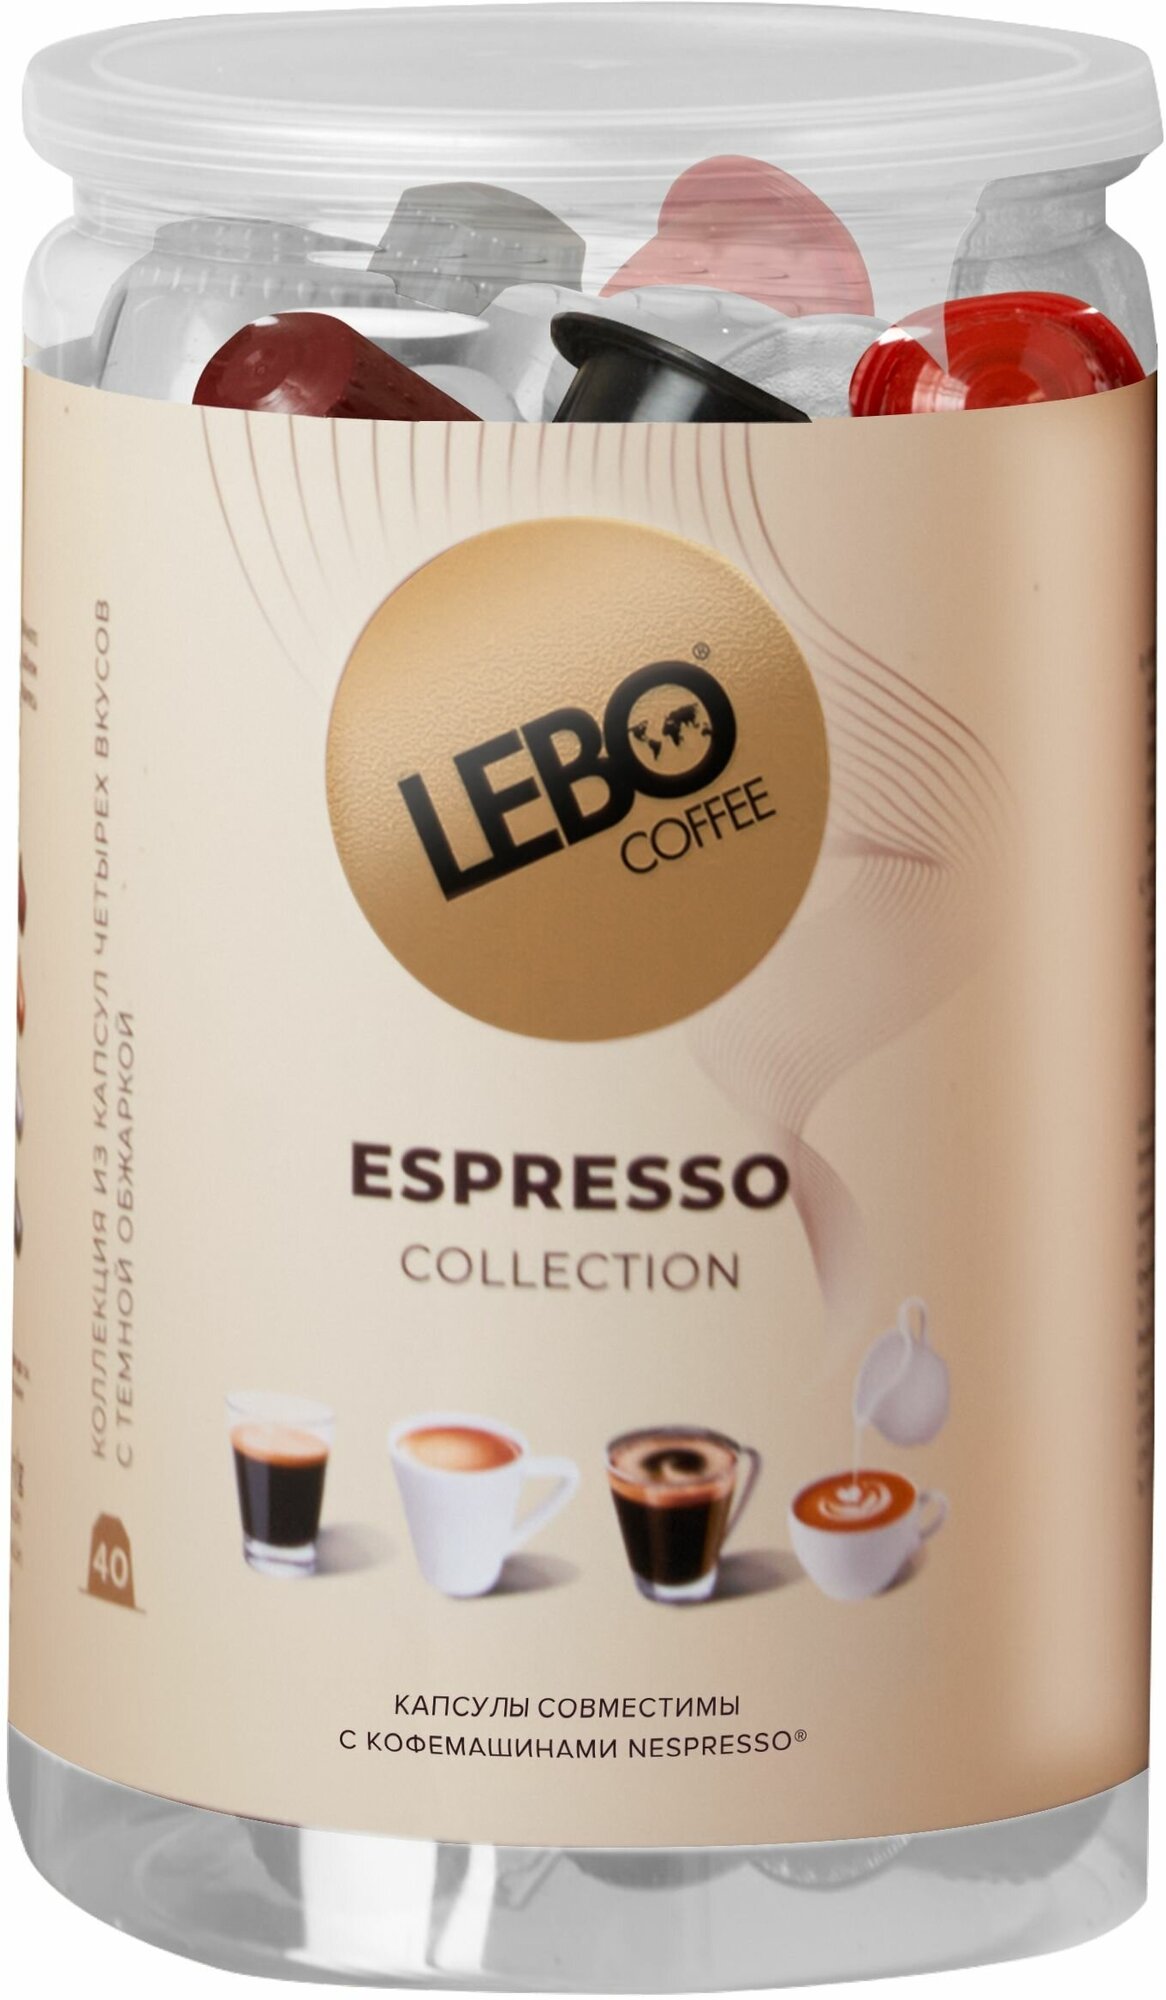 Кофе в капсулах LEBO ESPRESSO Nespresso COLLECTION банка 40 шт (220 г)